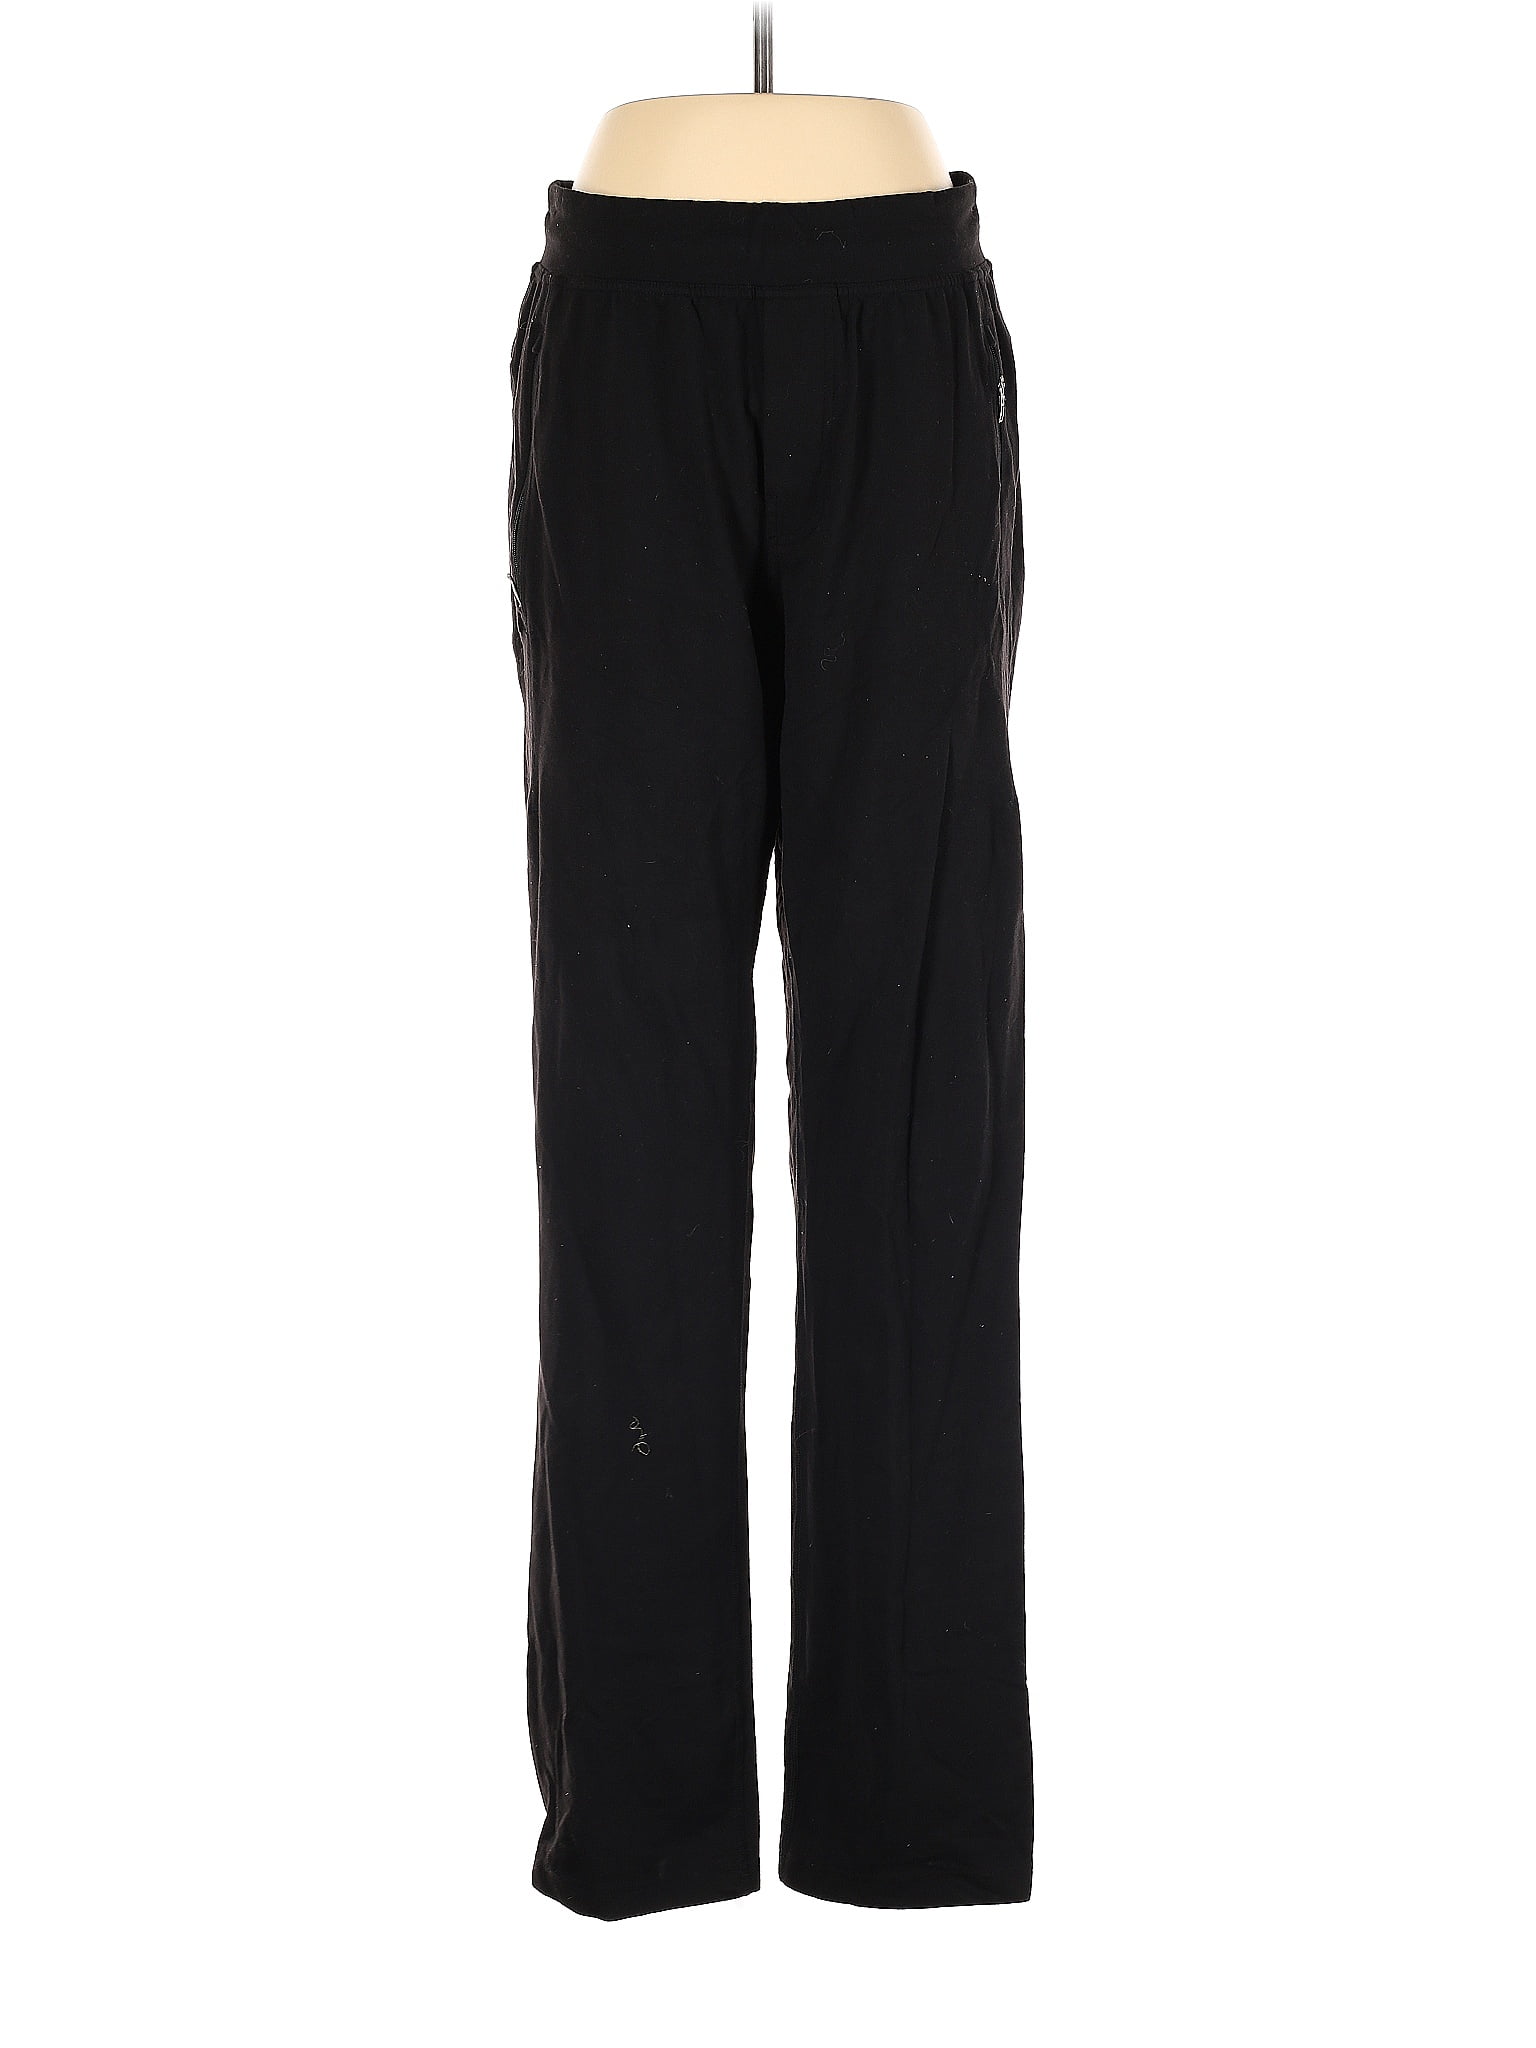 Lululemon Athletica Solid Black Active Pants Size M - 54% off | thredUP